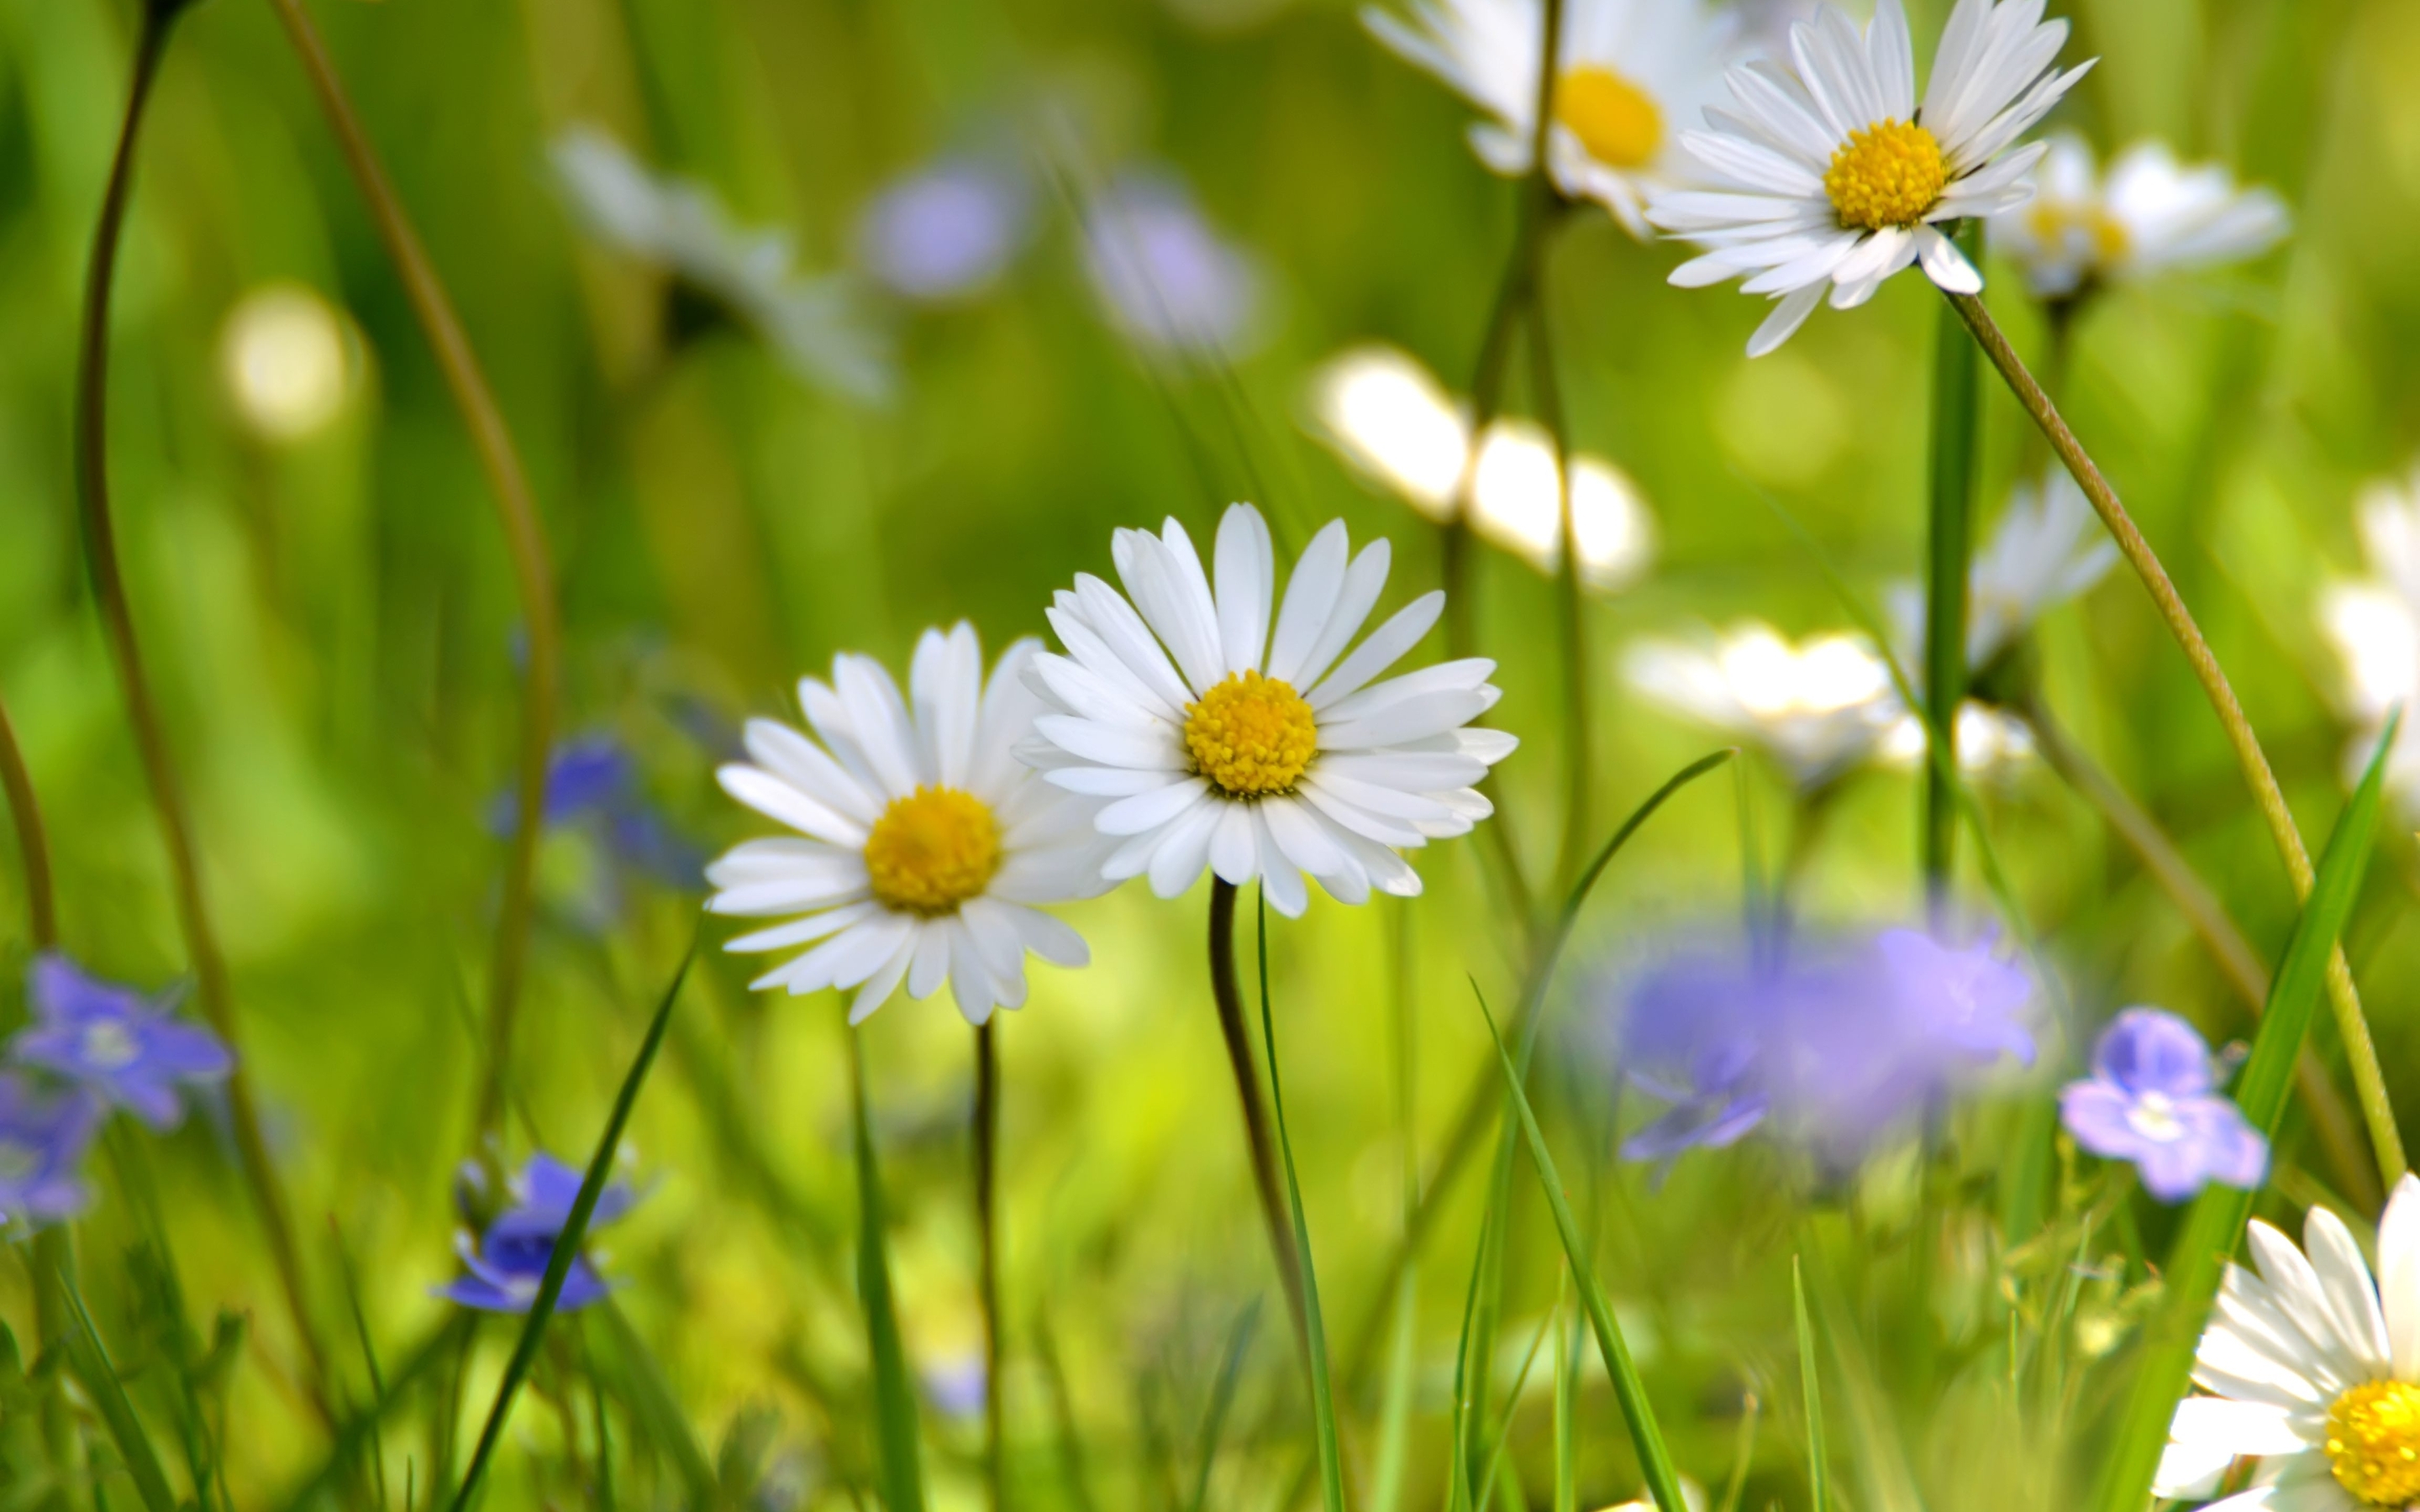 Image: Summer, daisies, field, meadow, grass